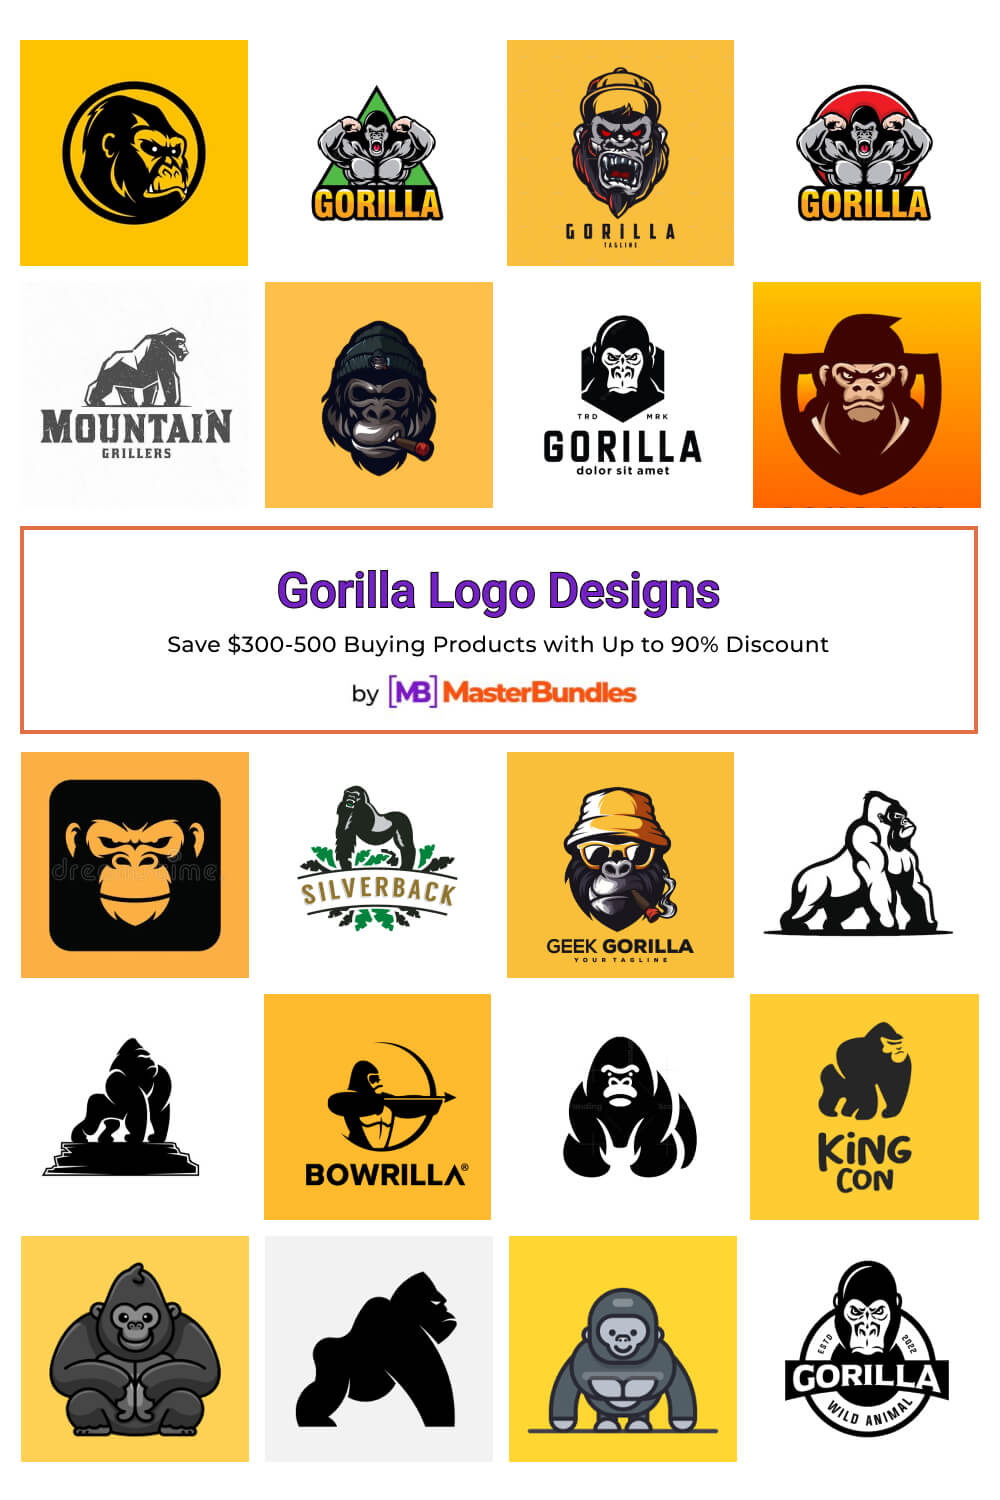 gorilla logo designs pinterest image.